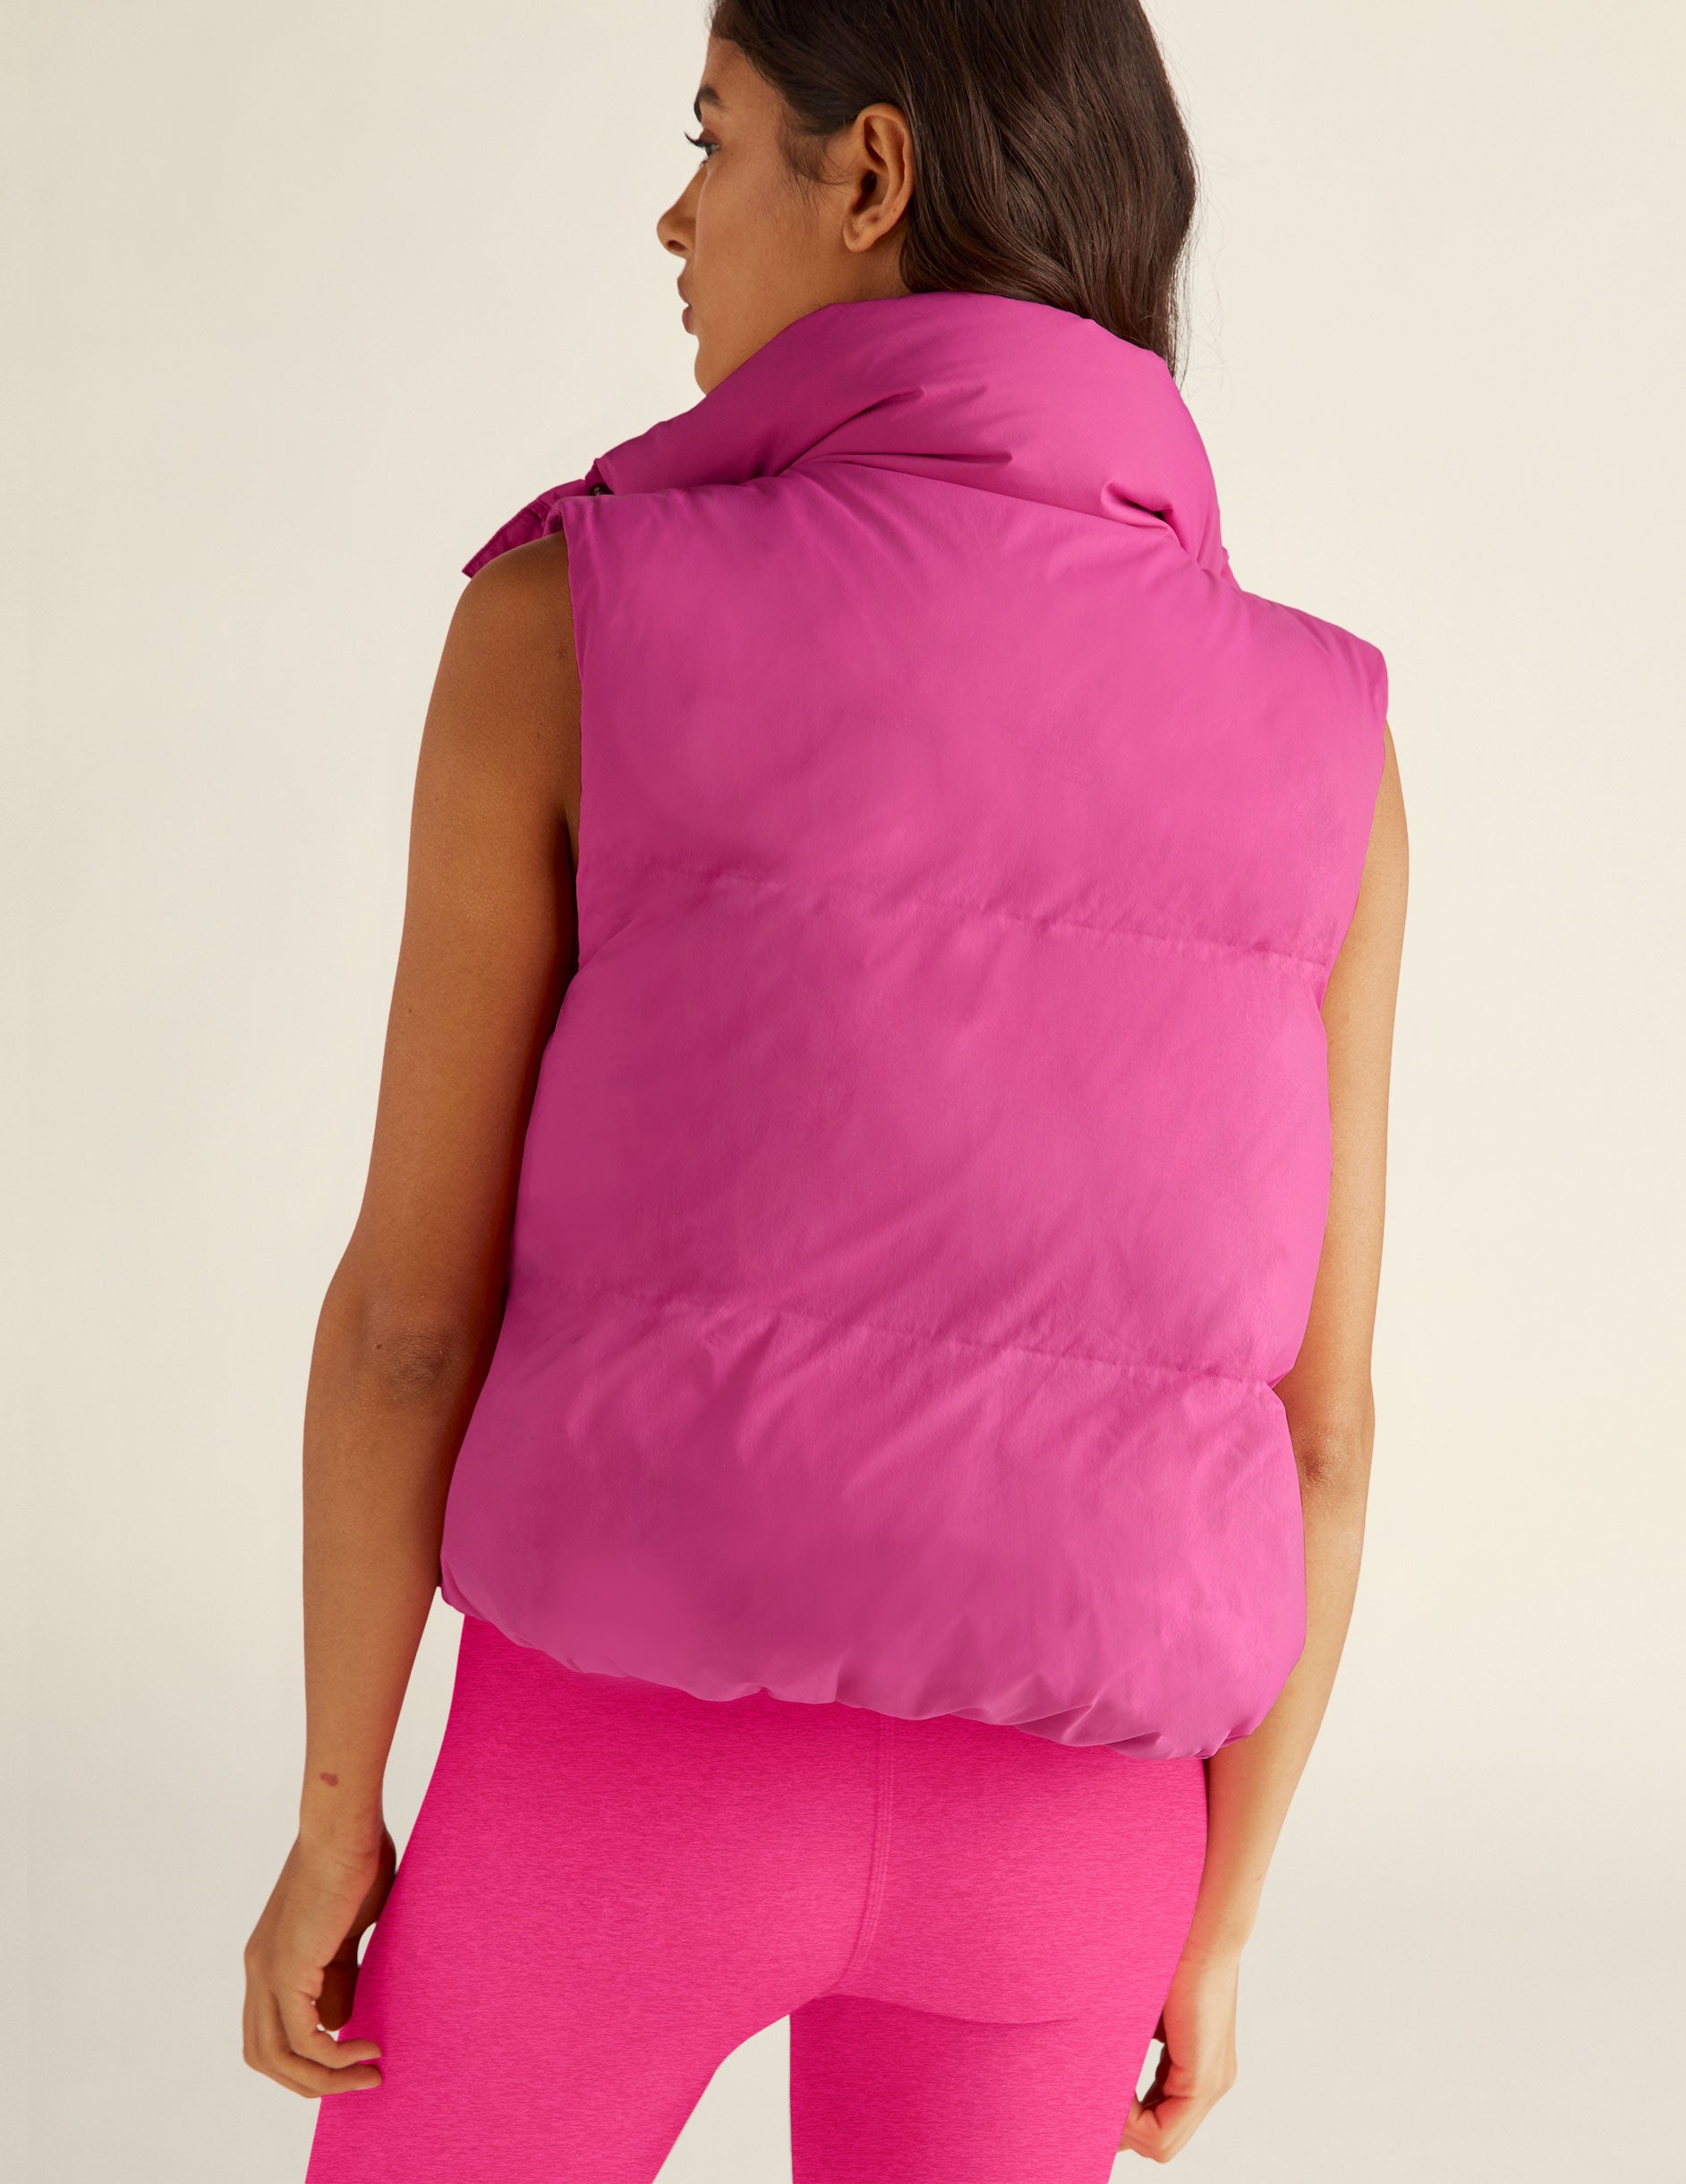 pink puffer vest. 